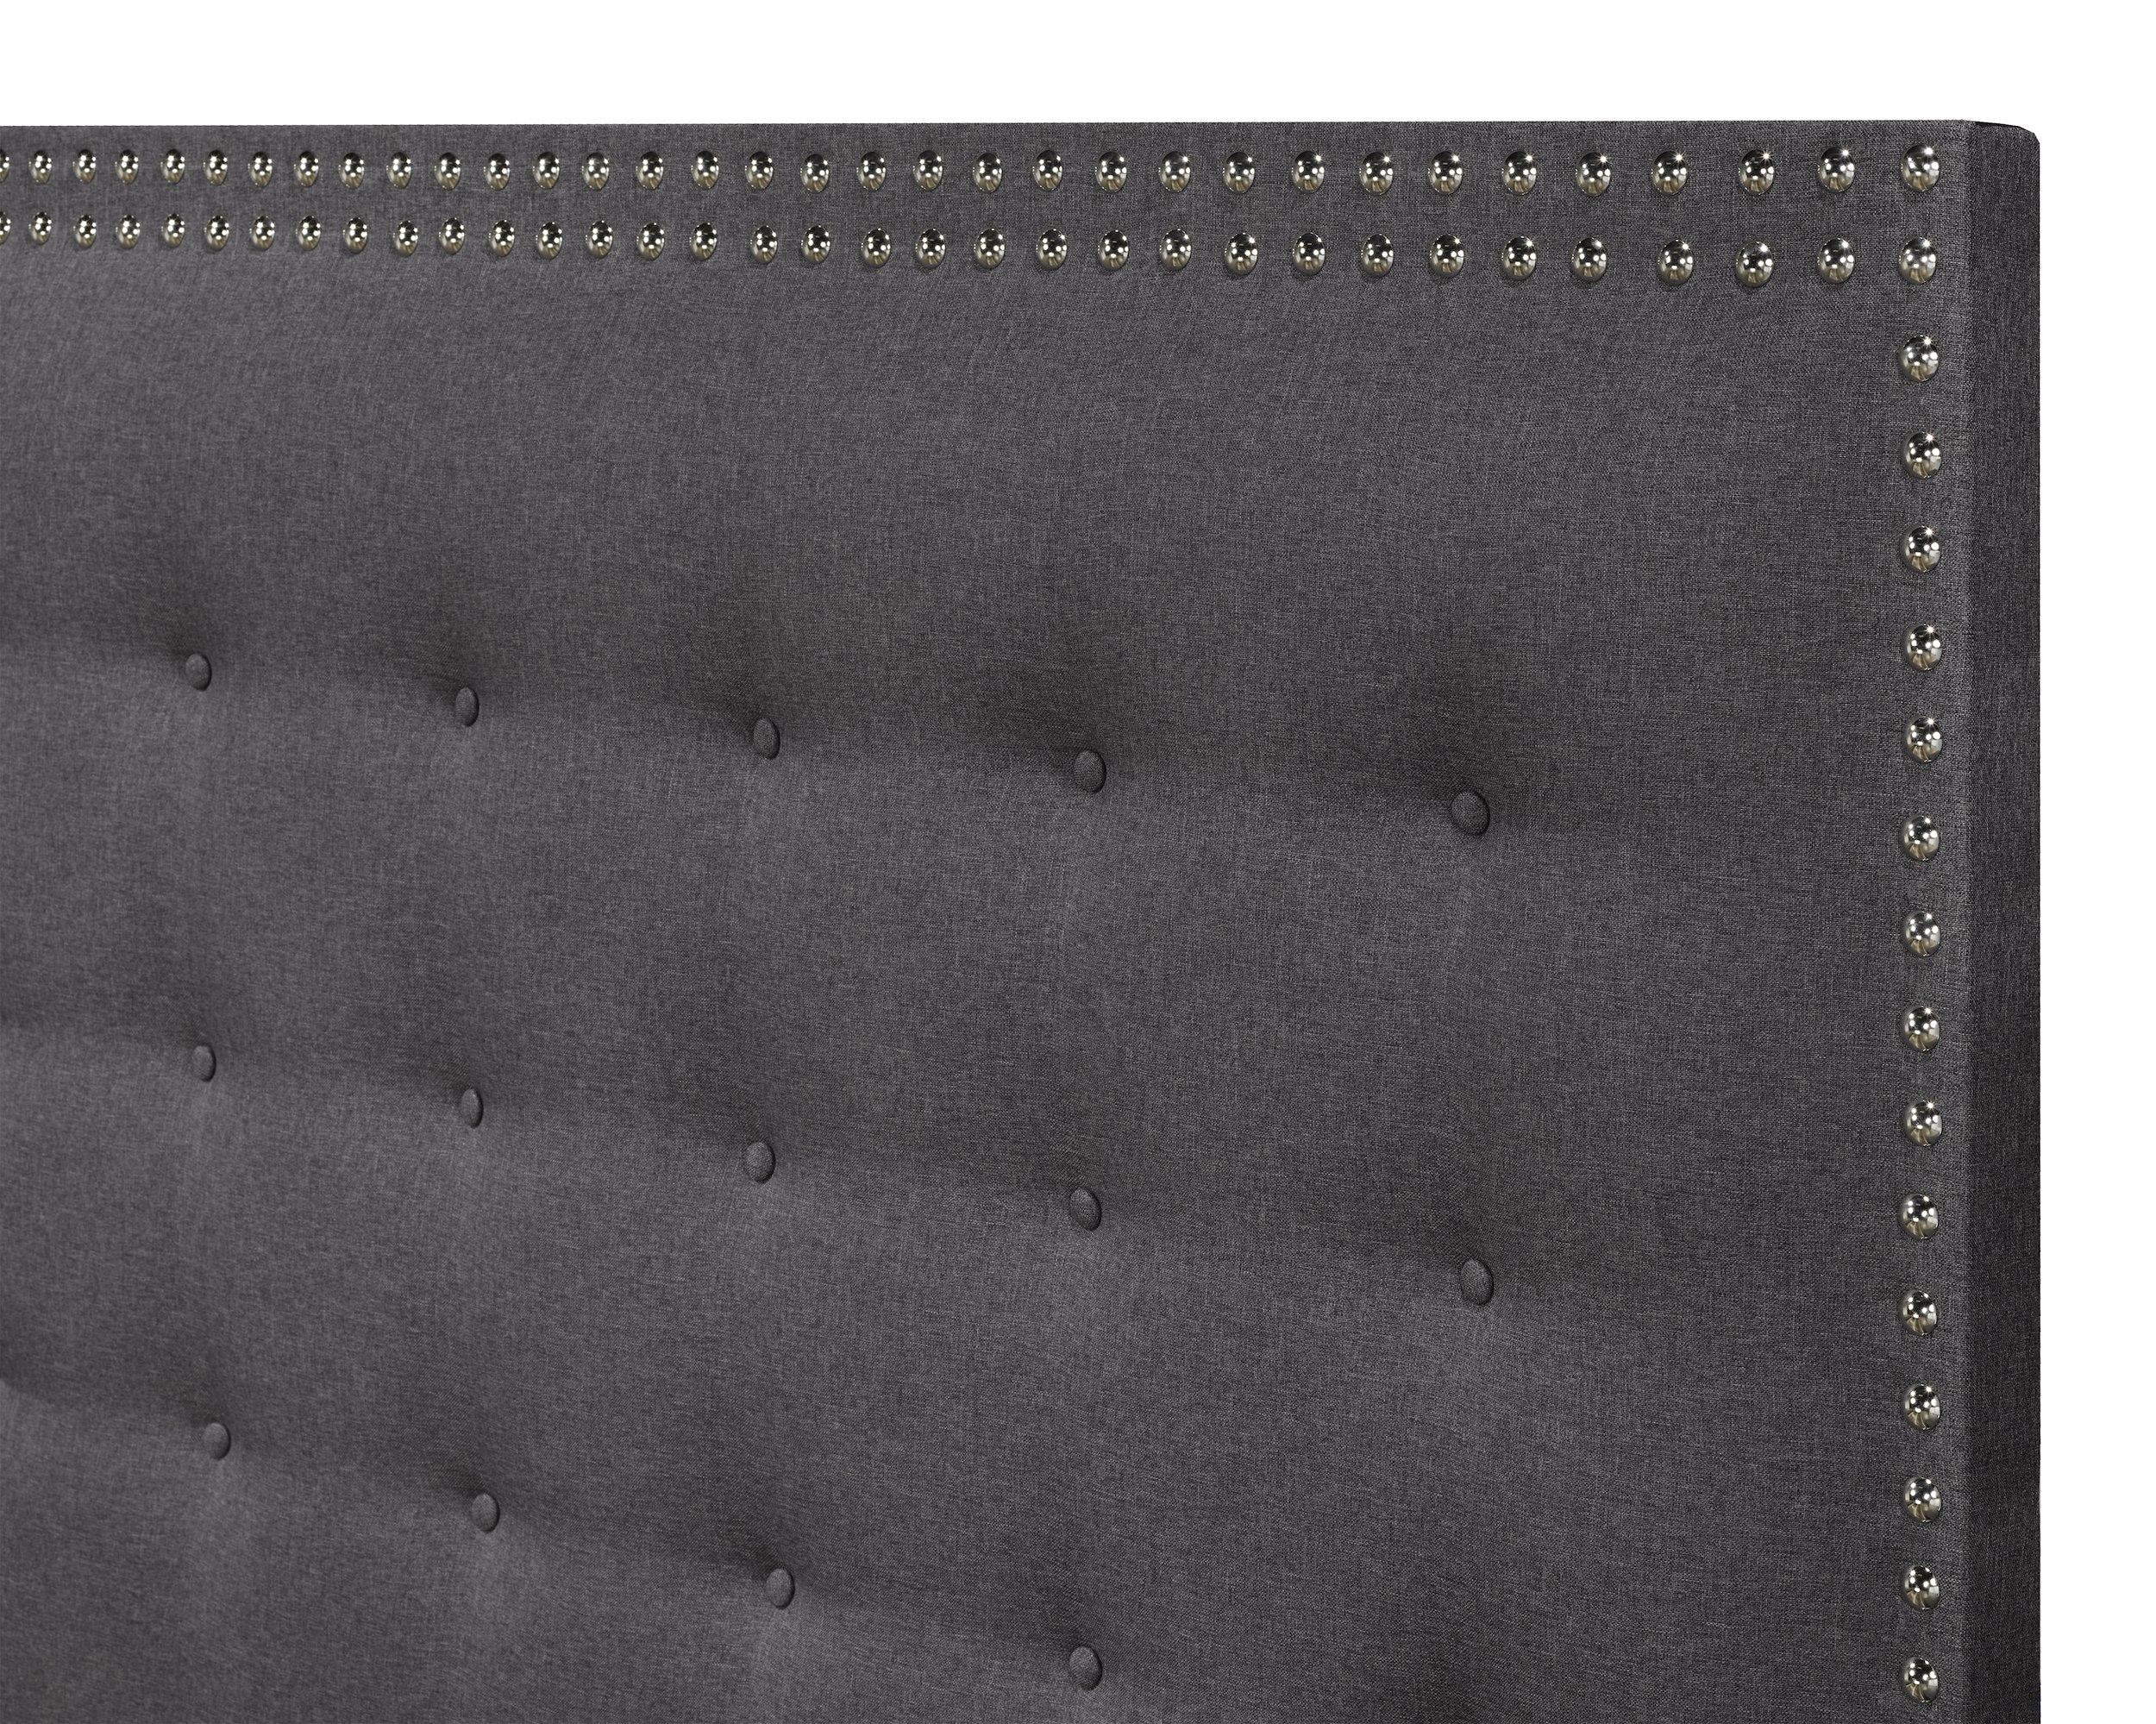 Rocklyn Platform Bed - Dark Grey Linen - Canadian Furniture